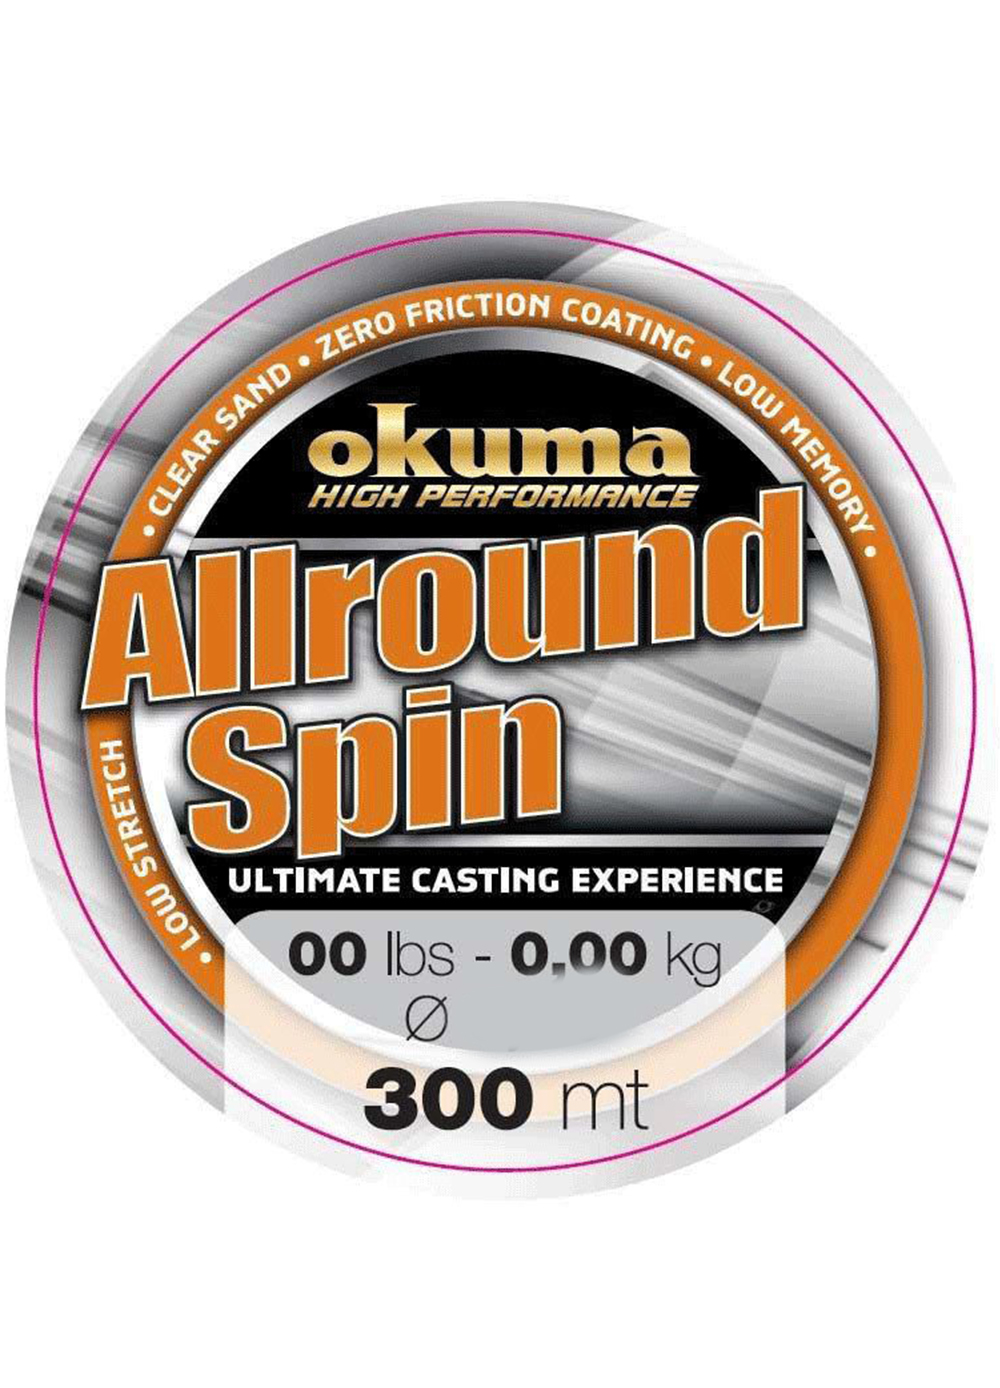 Okuma Allround Spin 300mt Brown Misina